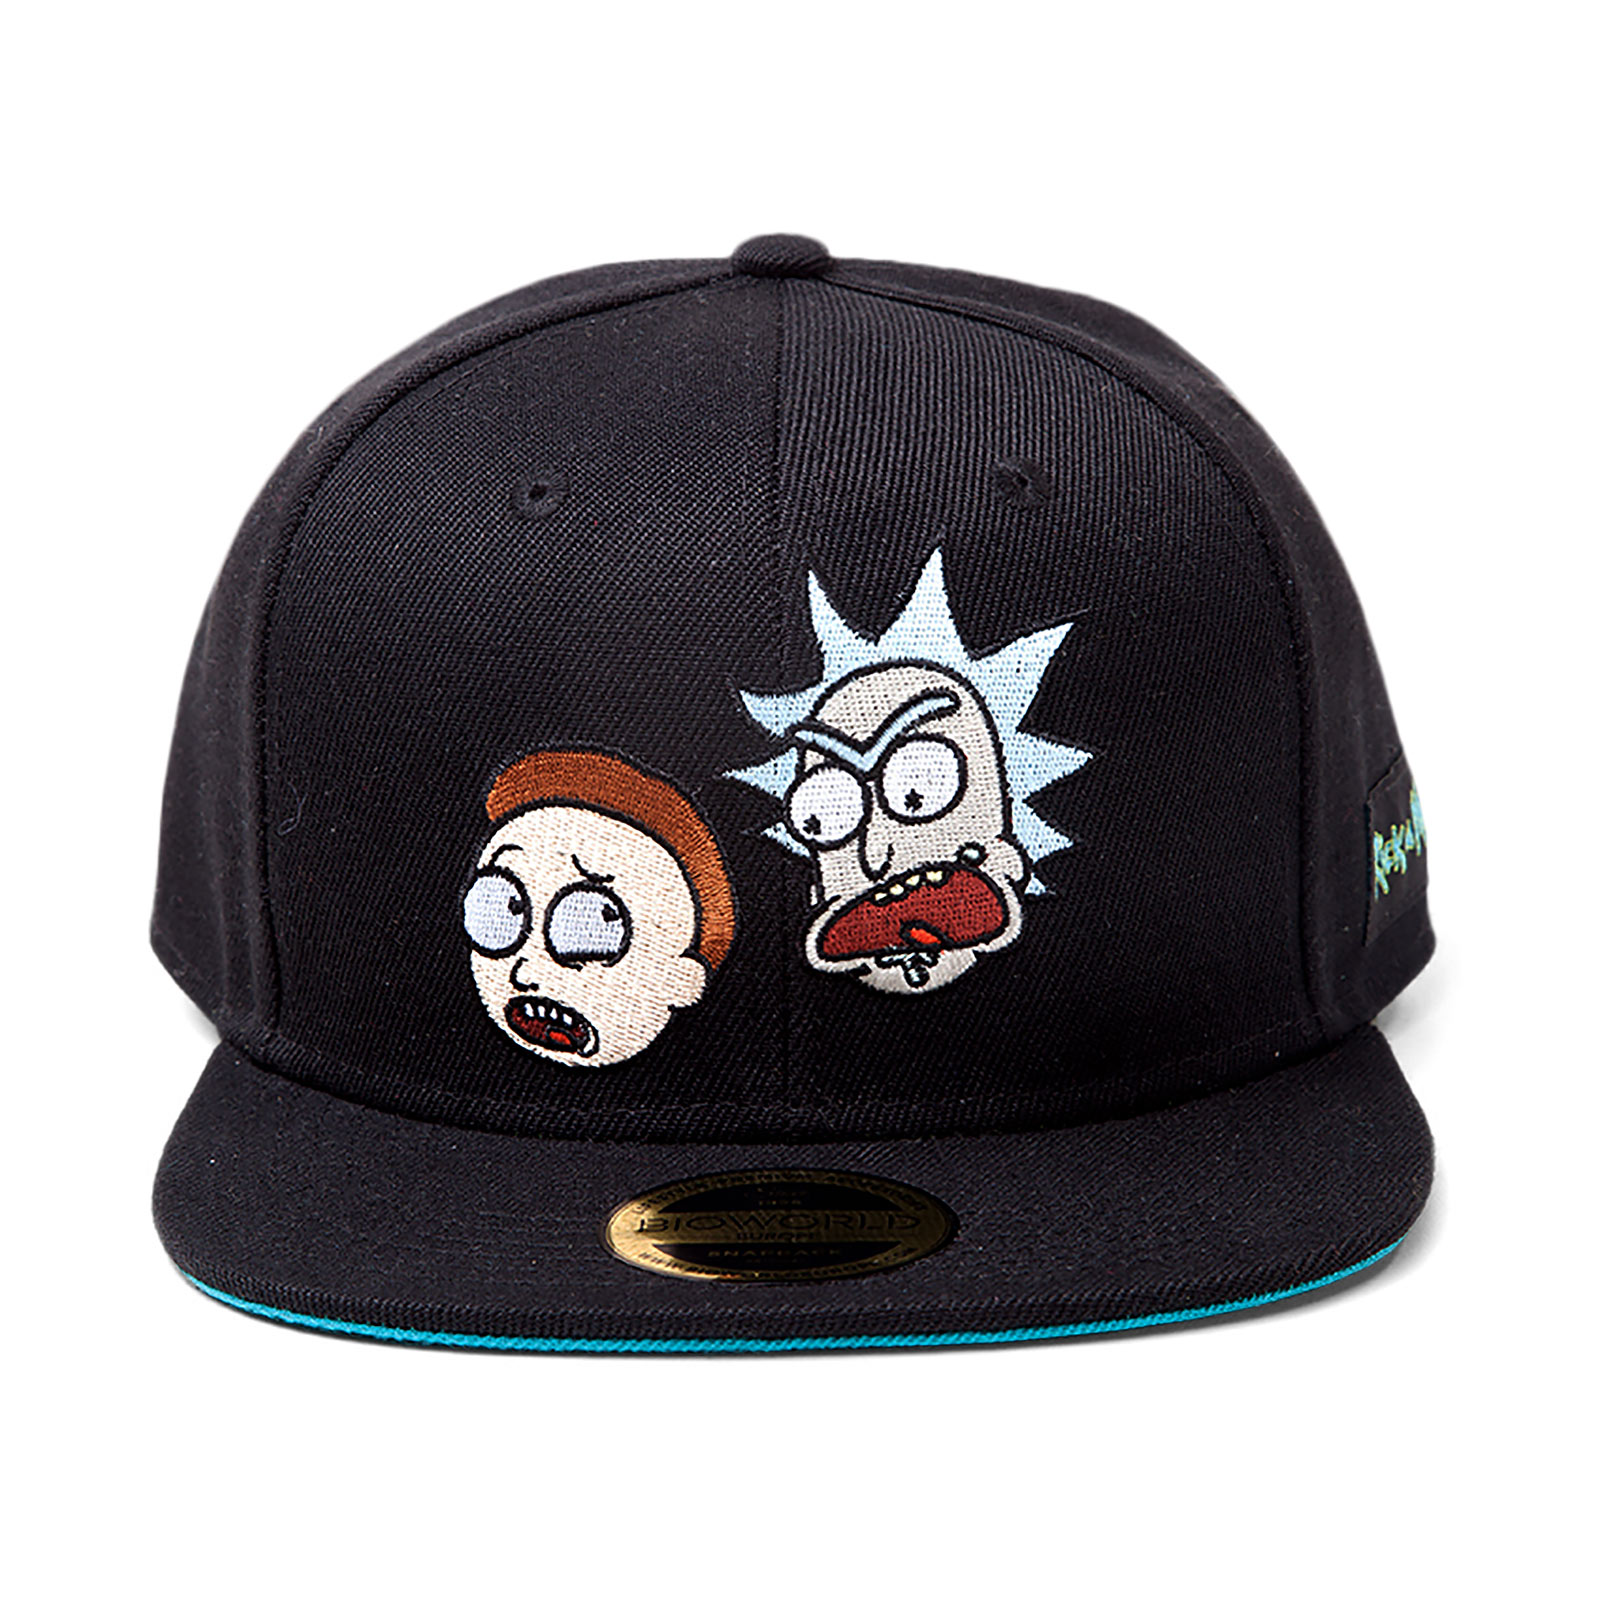 Rick and Morty - Faces Snapback Cap Black